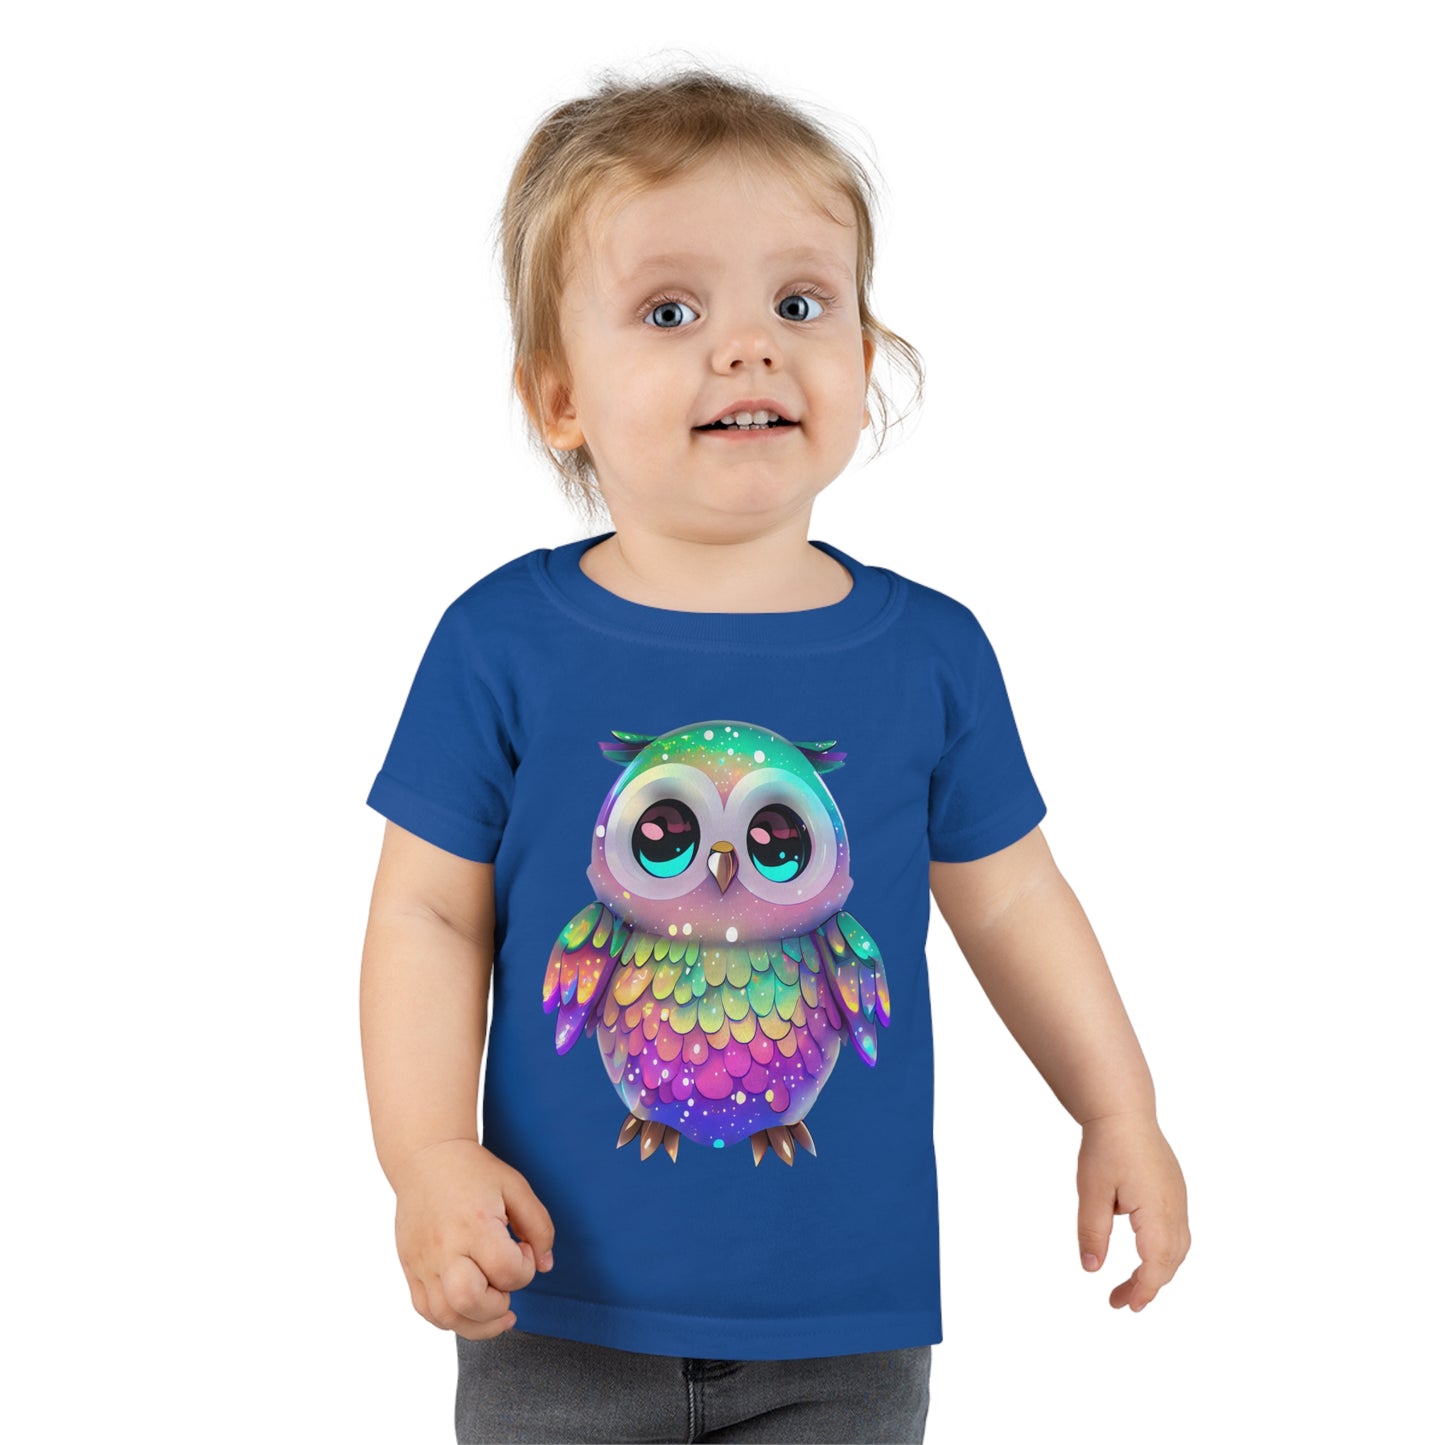 Iridescent Rainbow Owl Toddler T-shirt, Sizes 2T-6T